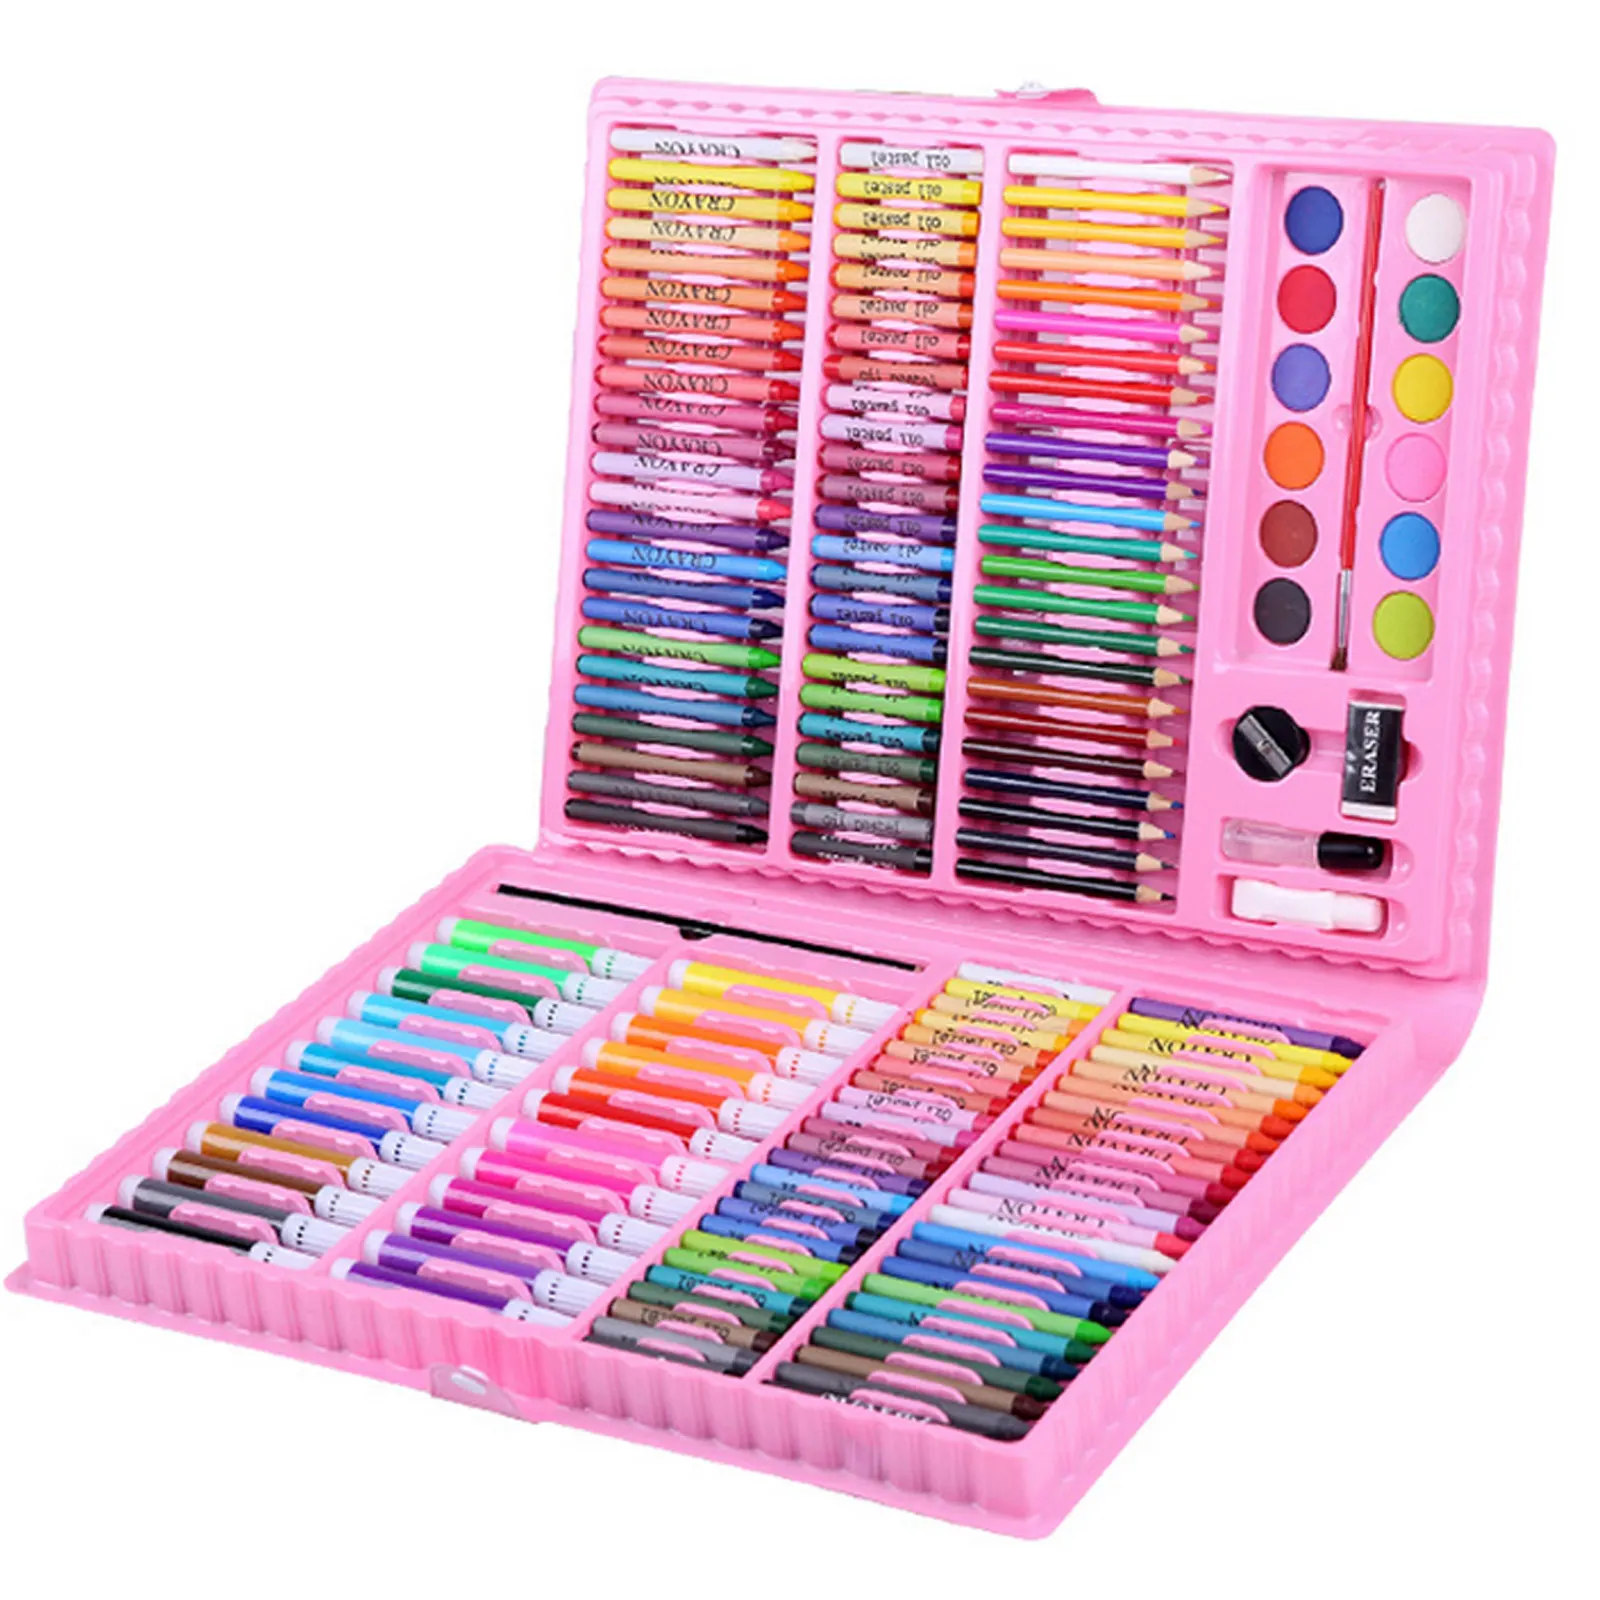 https://ae01.alicdn.com/kf/Haf360f2f74b143ba8999f598376f2825J/168PCS-Set-Art-Set-Oil-Pastel-Crayon-Colored-Pencils-Marker-Pens-Watercolor-Paint-Painting-Drawing-Kit.jpg